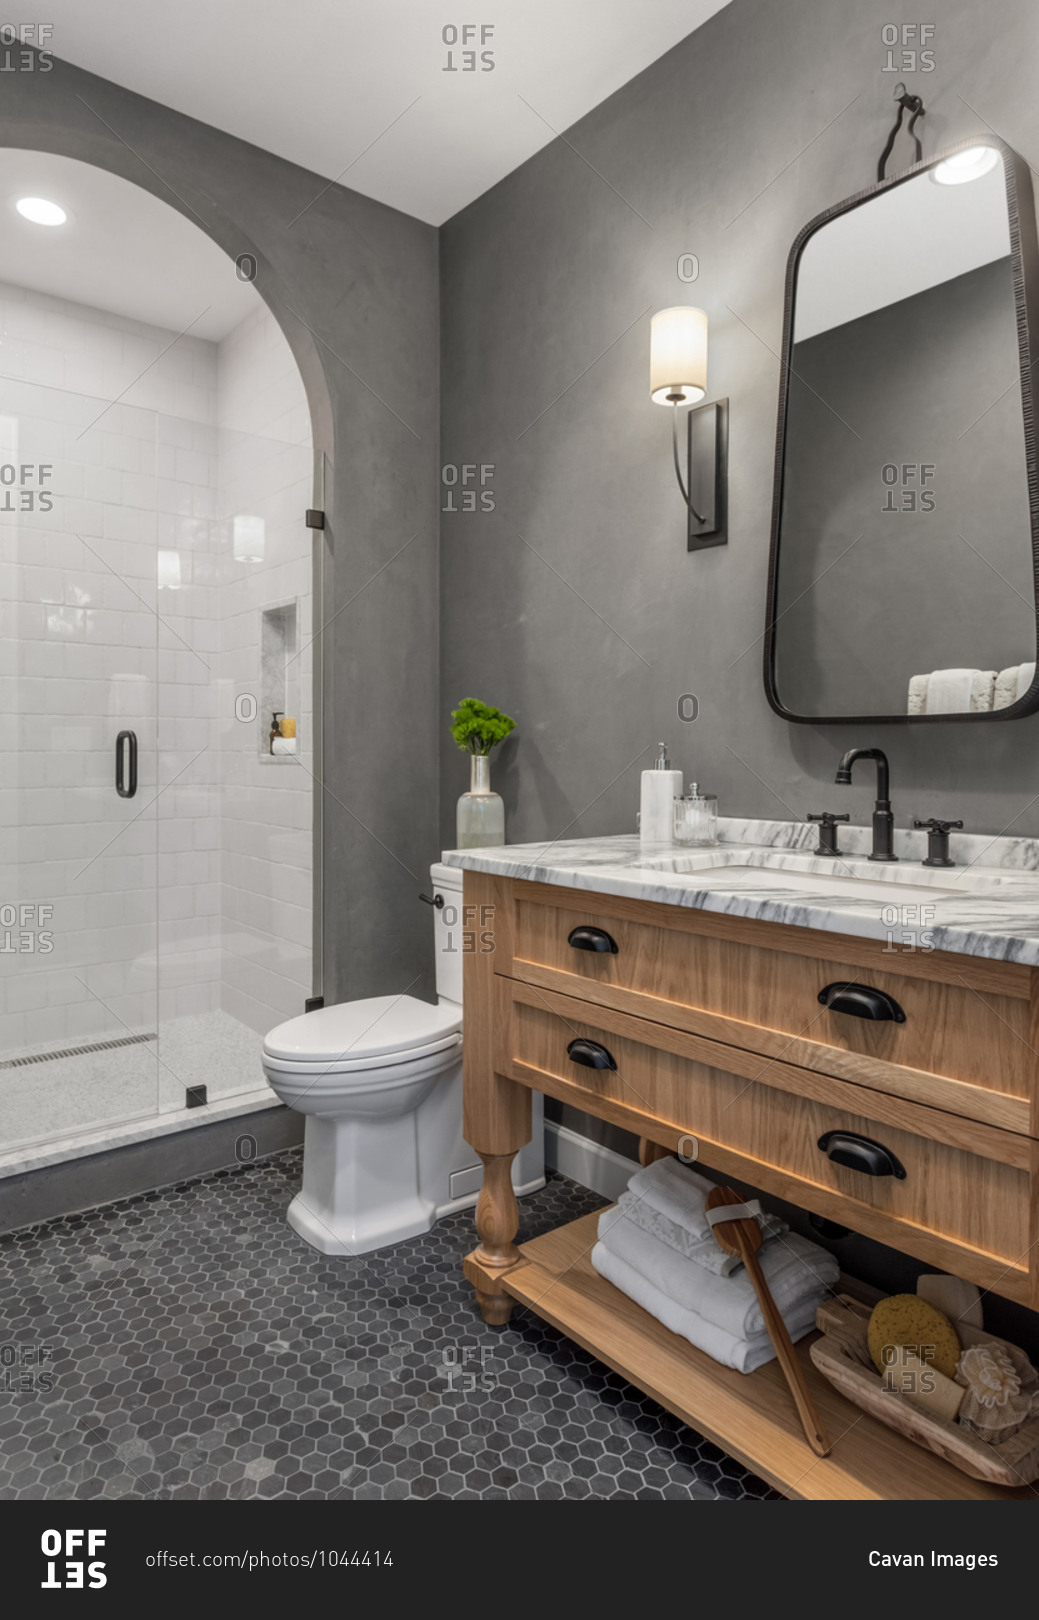 Bathroom in home with shower, vanity, mirror, sink, and tile floor